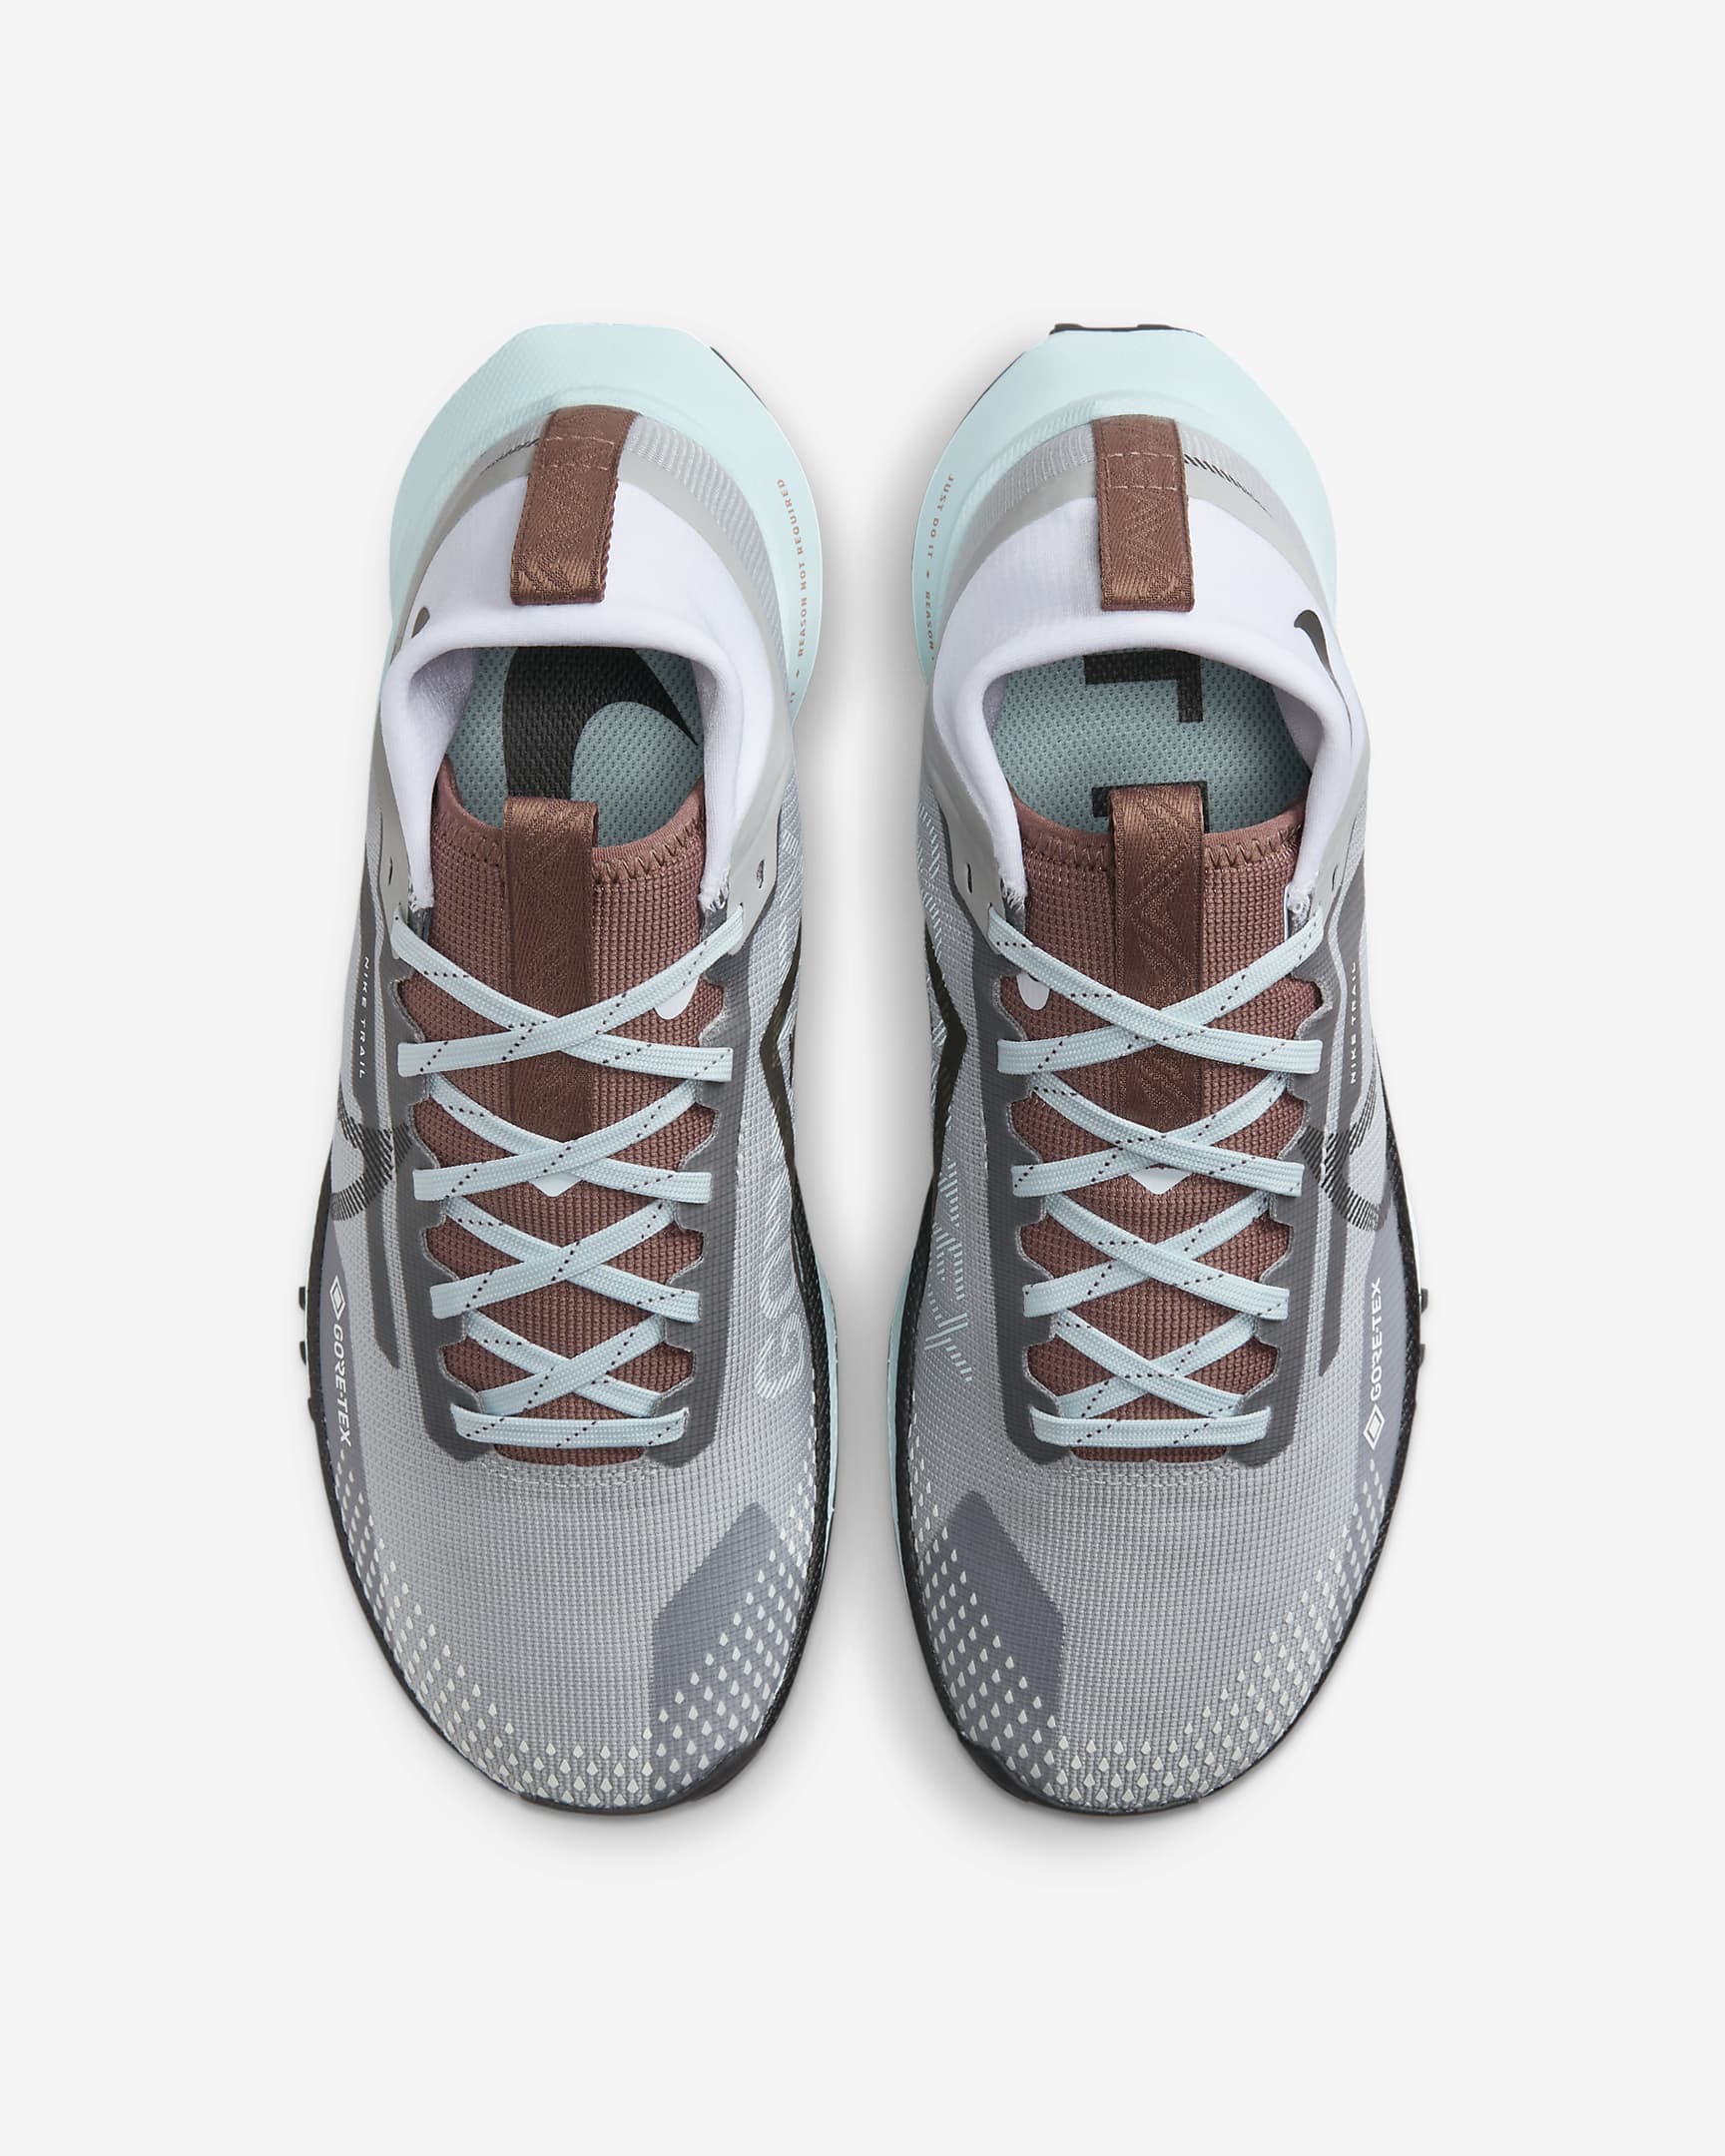 Nike Pegasus Trail 4 GORE-TEX Women's Waterproof Trail Running Shoes - Light Smoke Grey/Glacier Blue/Football Grey/Black